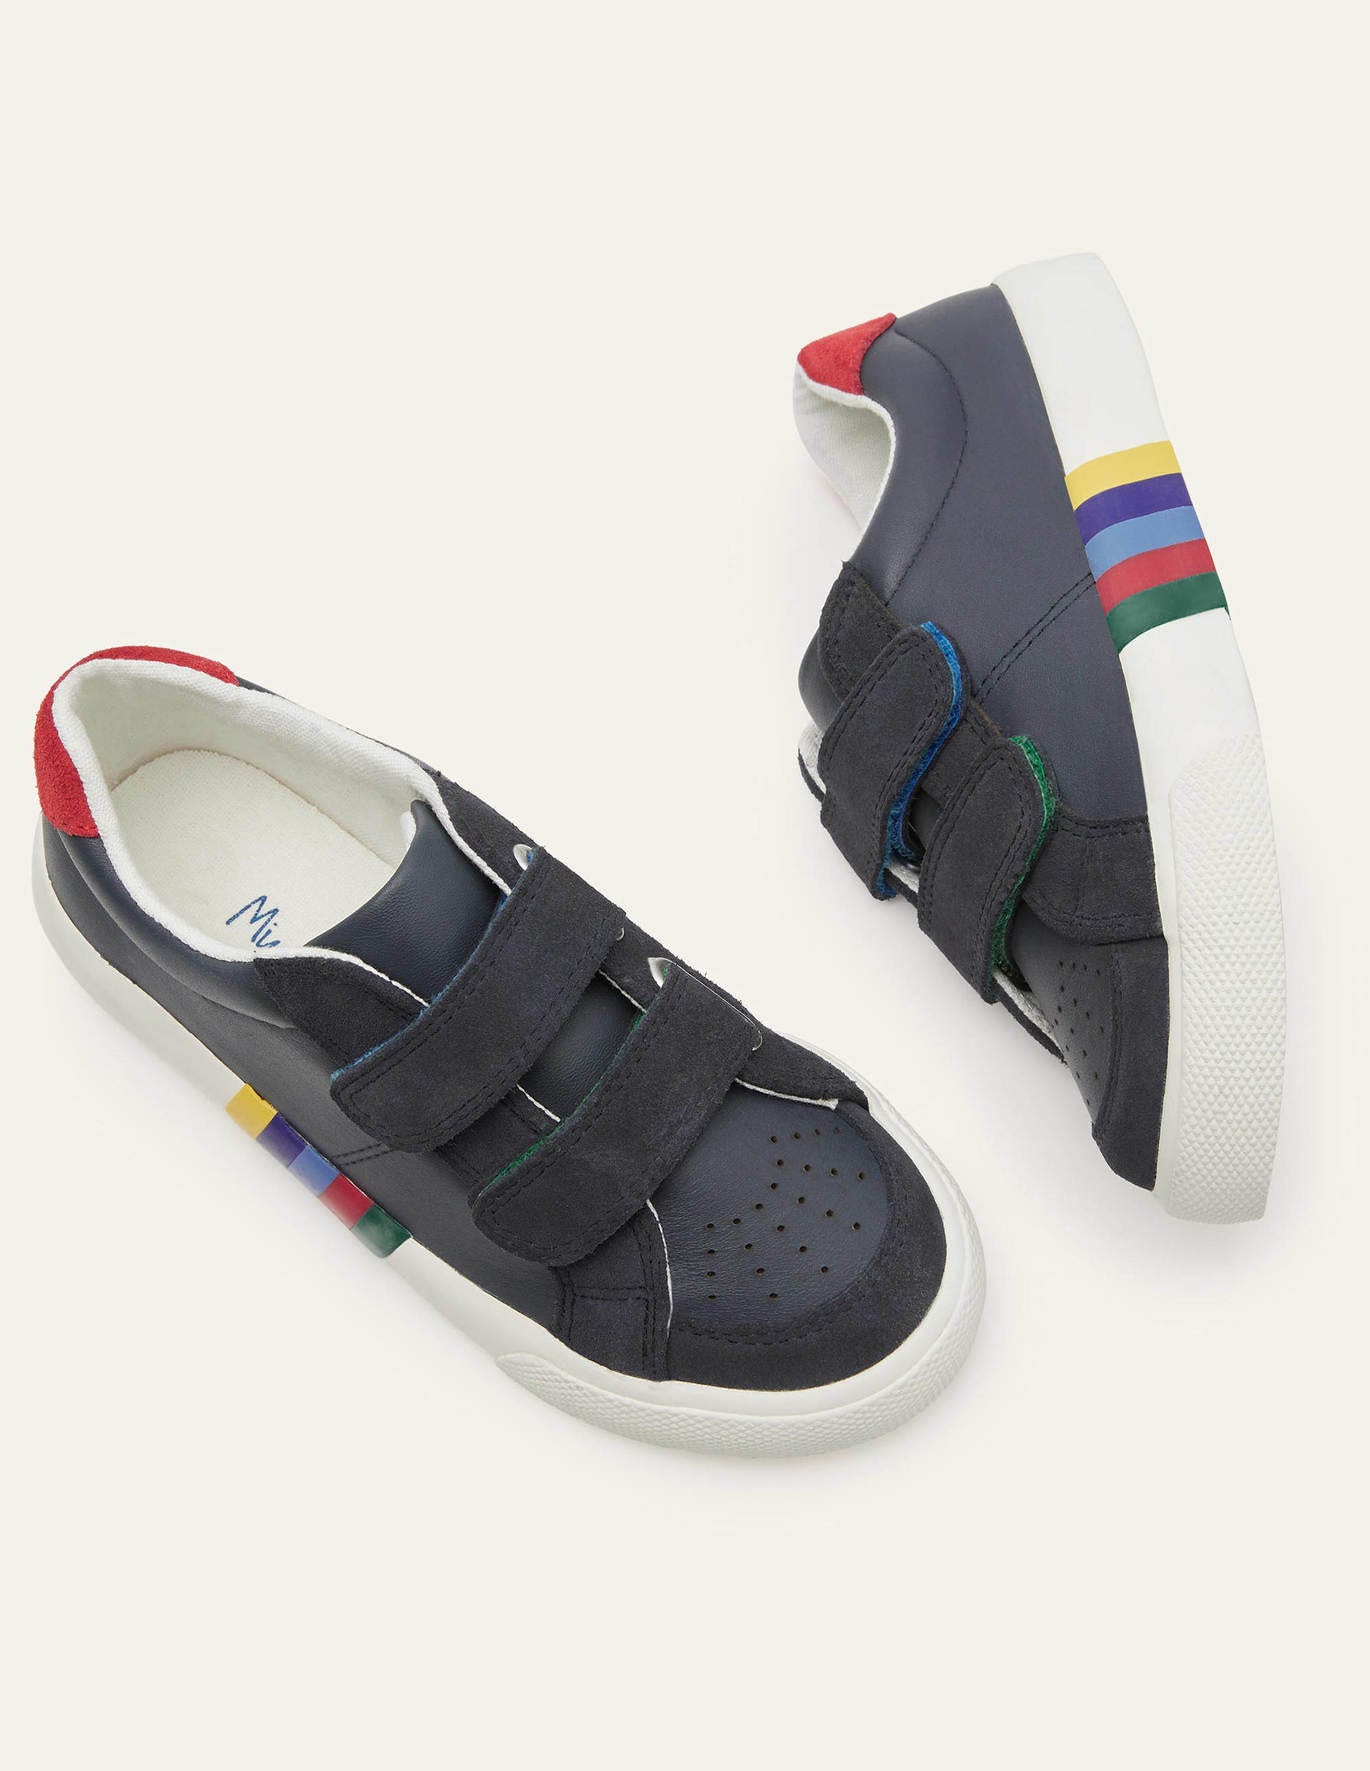 Boden 2 Strap Low Top Sneakers - College Navy Rainbow